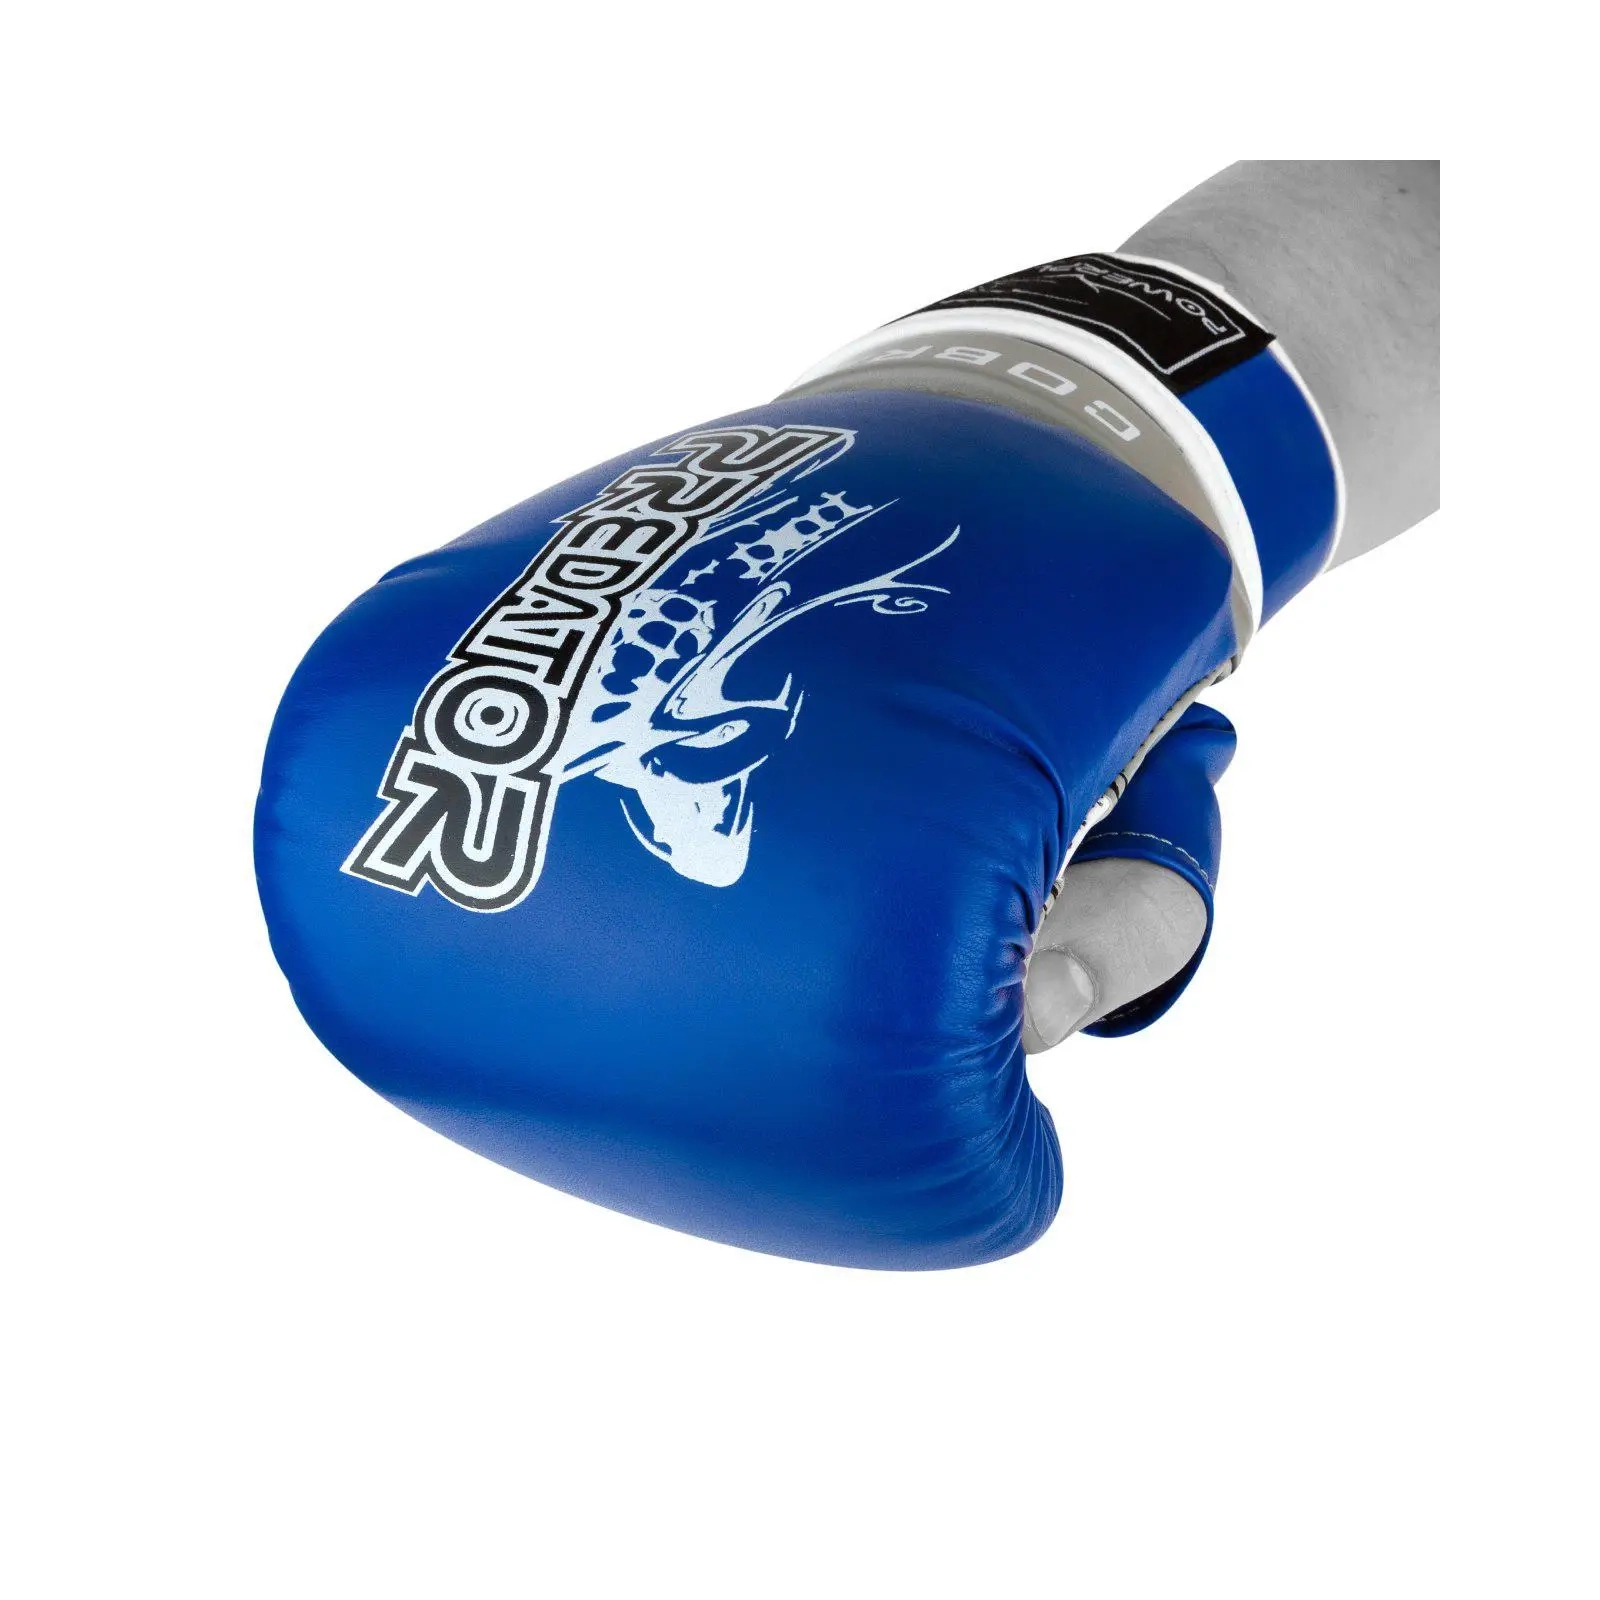 Снарядные перчатки PowerPlay 3038 Синьо-Сірі S (PP_3038_S_Blue/Grey) изображение 6